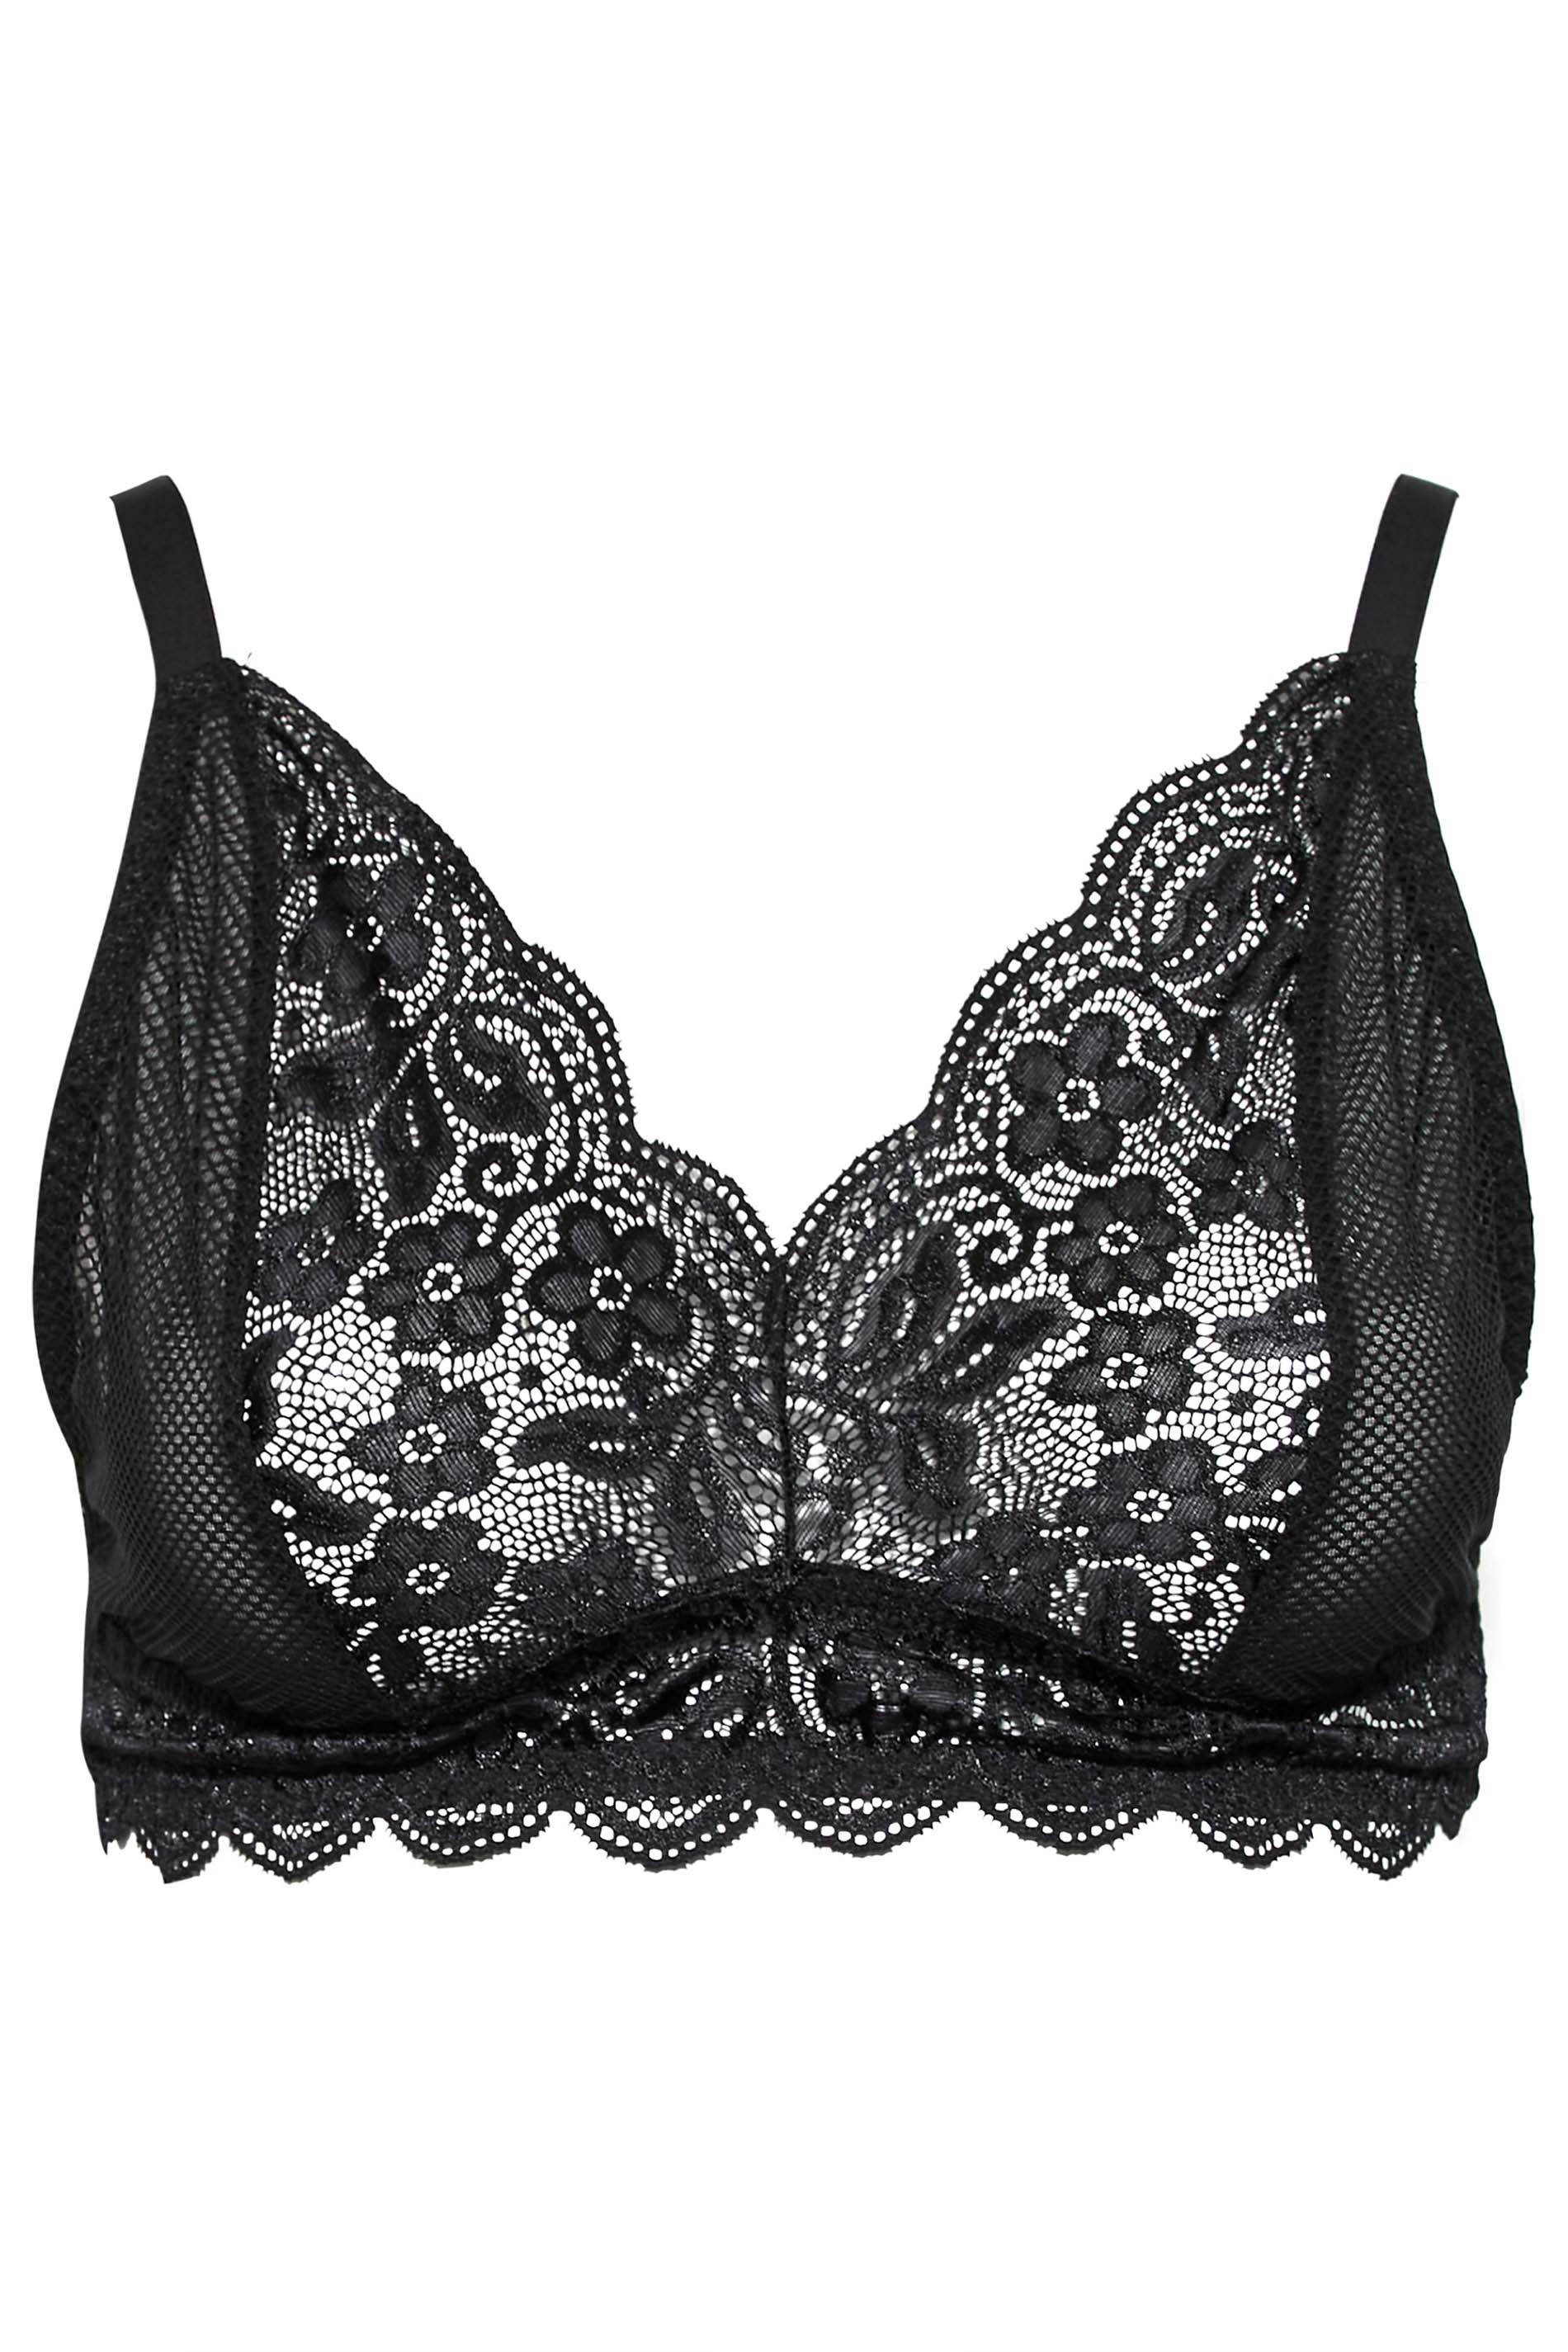 Plus-Size Black Lace Fishnet Bra | Yours Clothing